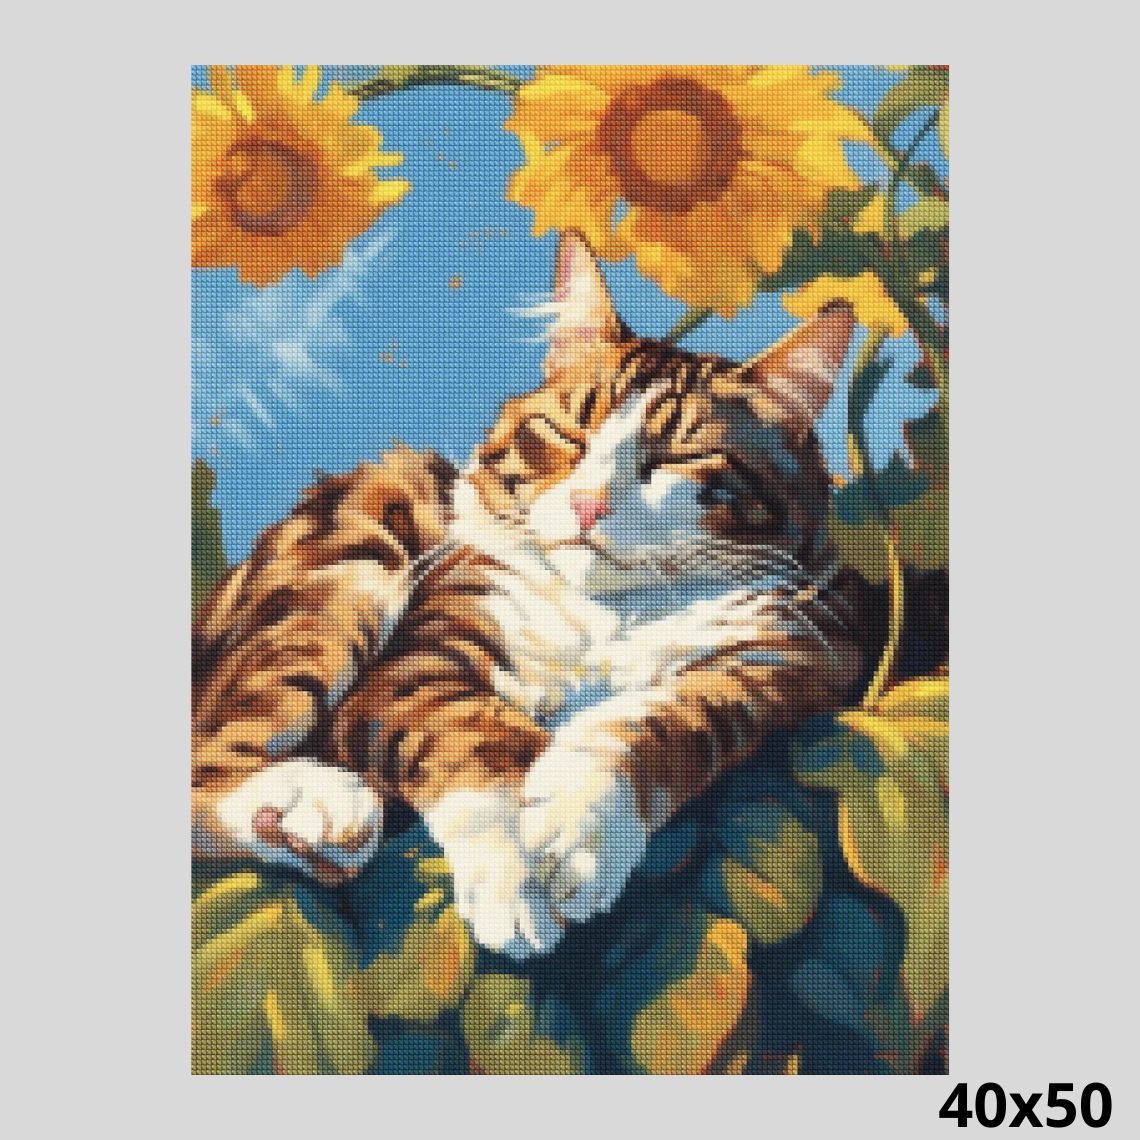 Sleeping Cat and Sunflowers 40x50 Diamond Painting